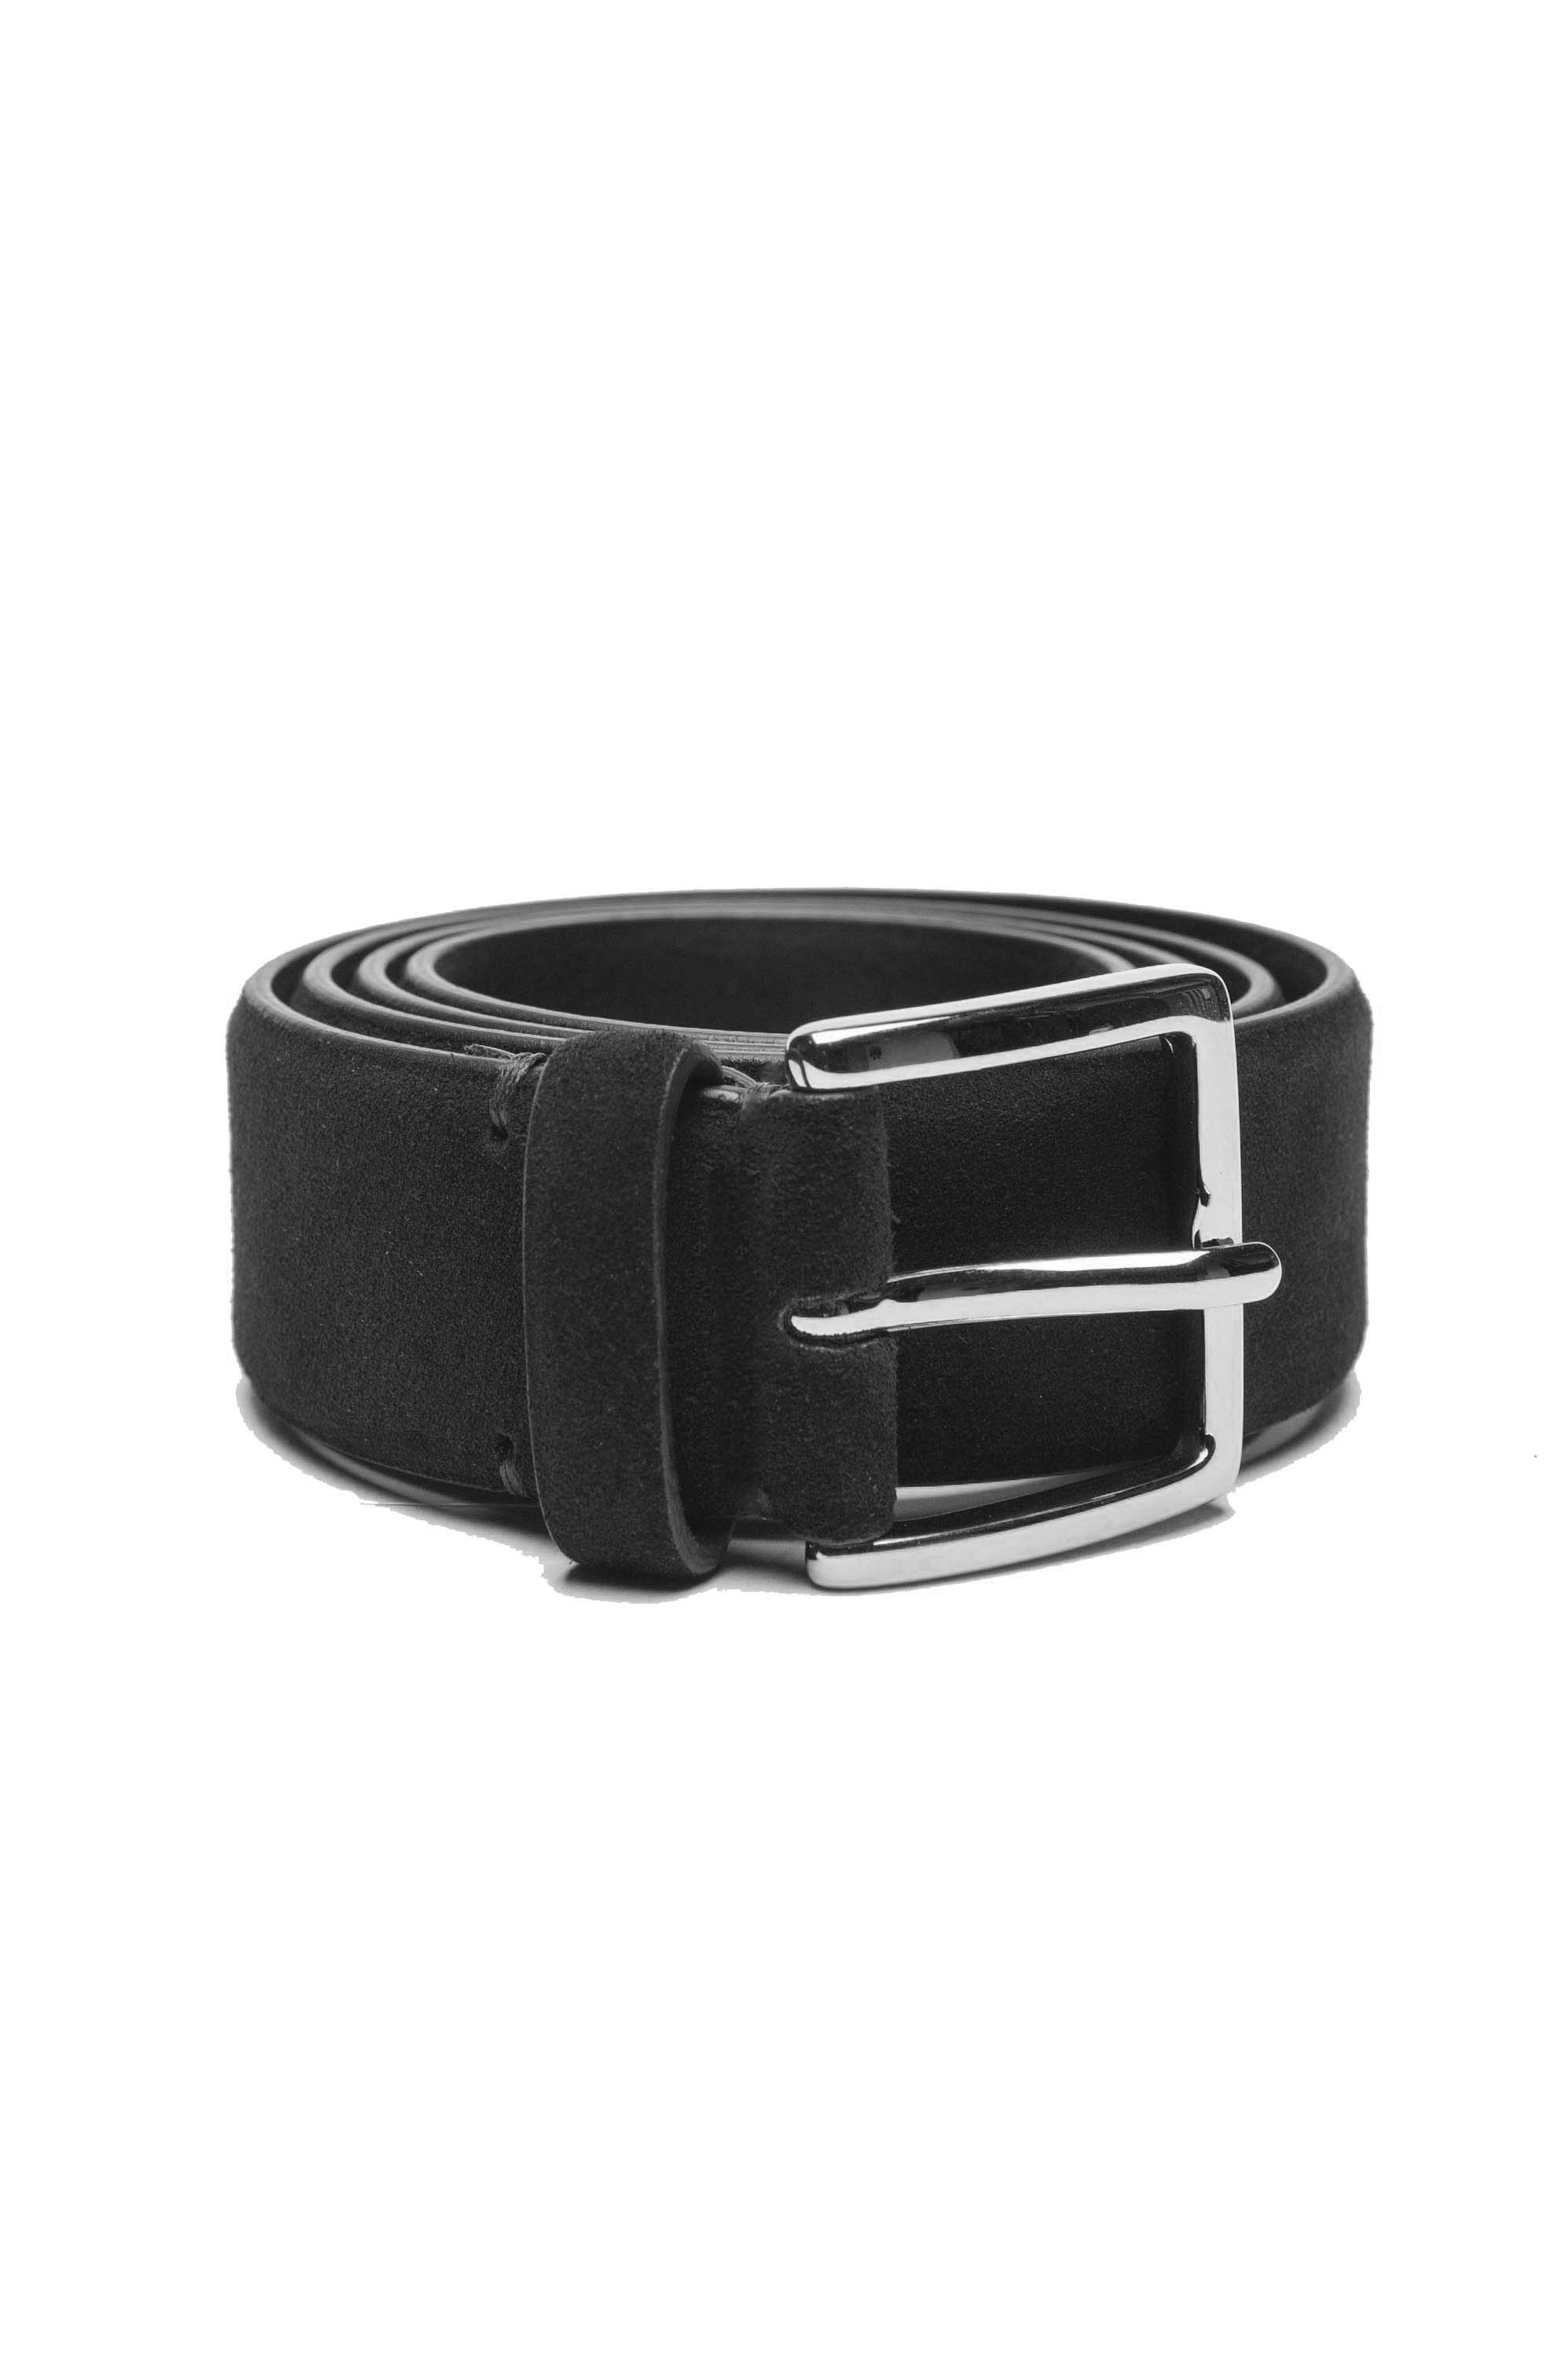 SBU 03013_2021AW Black calfskin suede belt 1.4 inches  01